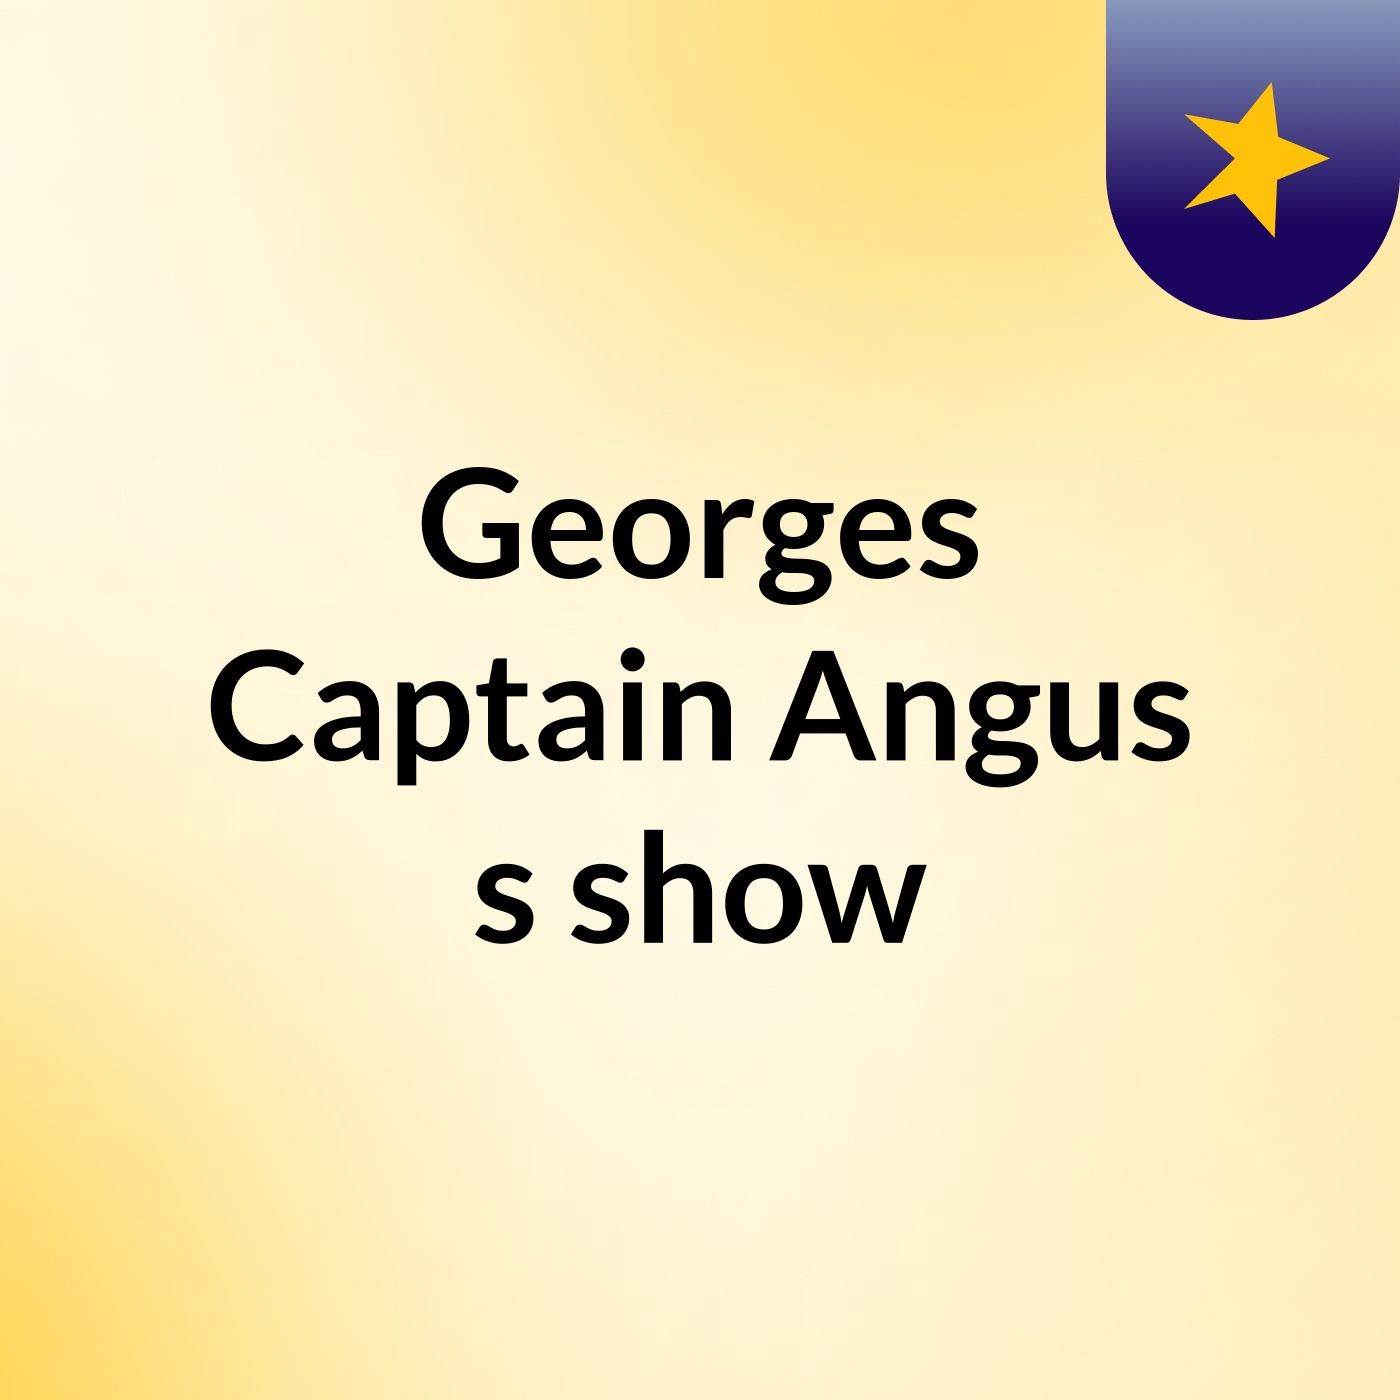 Georges Captain Angus's show